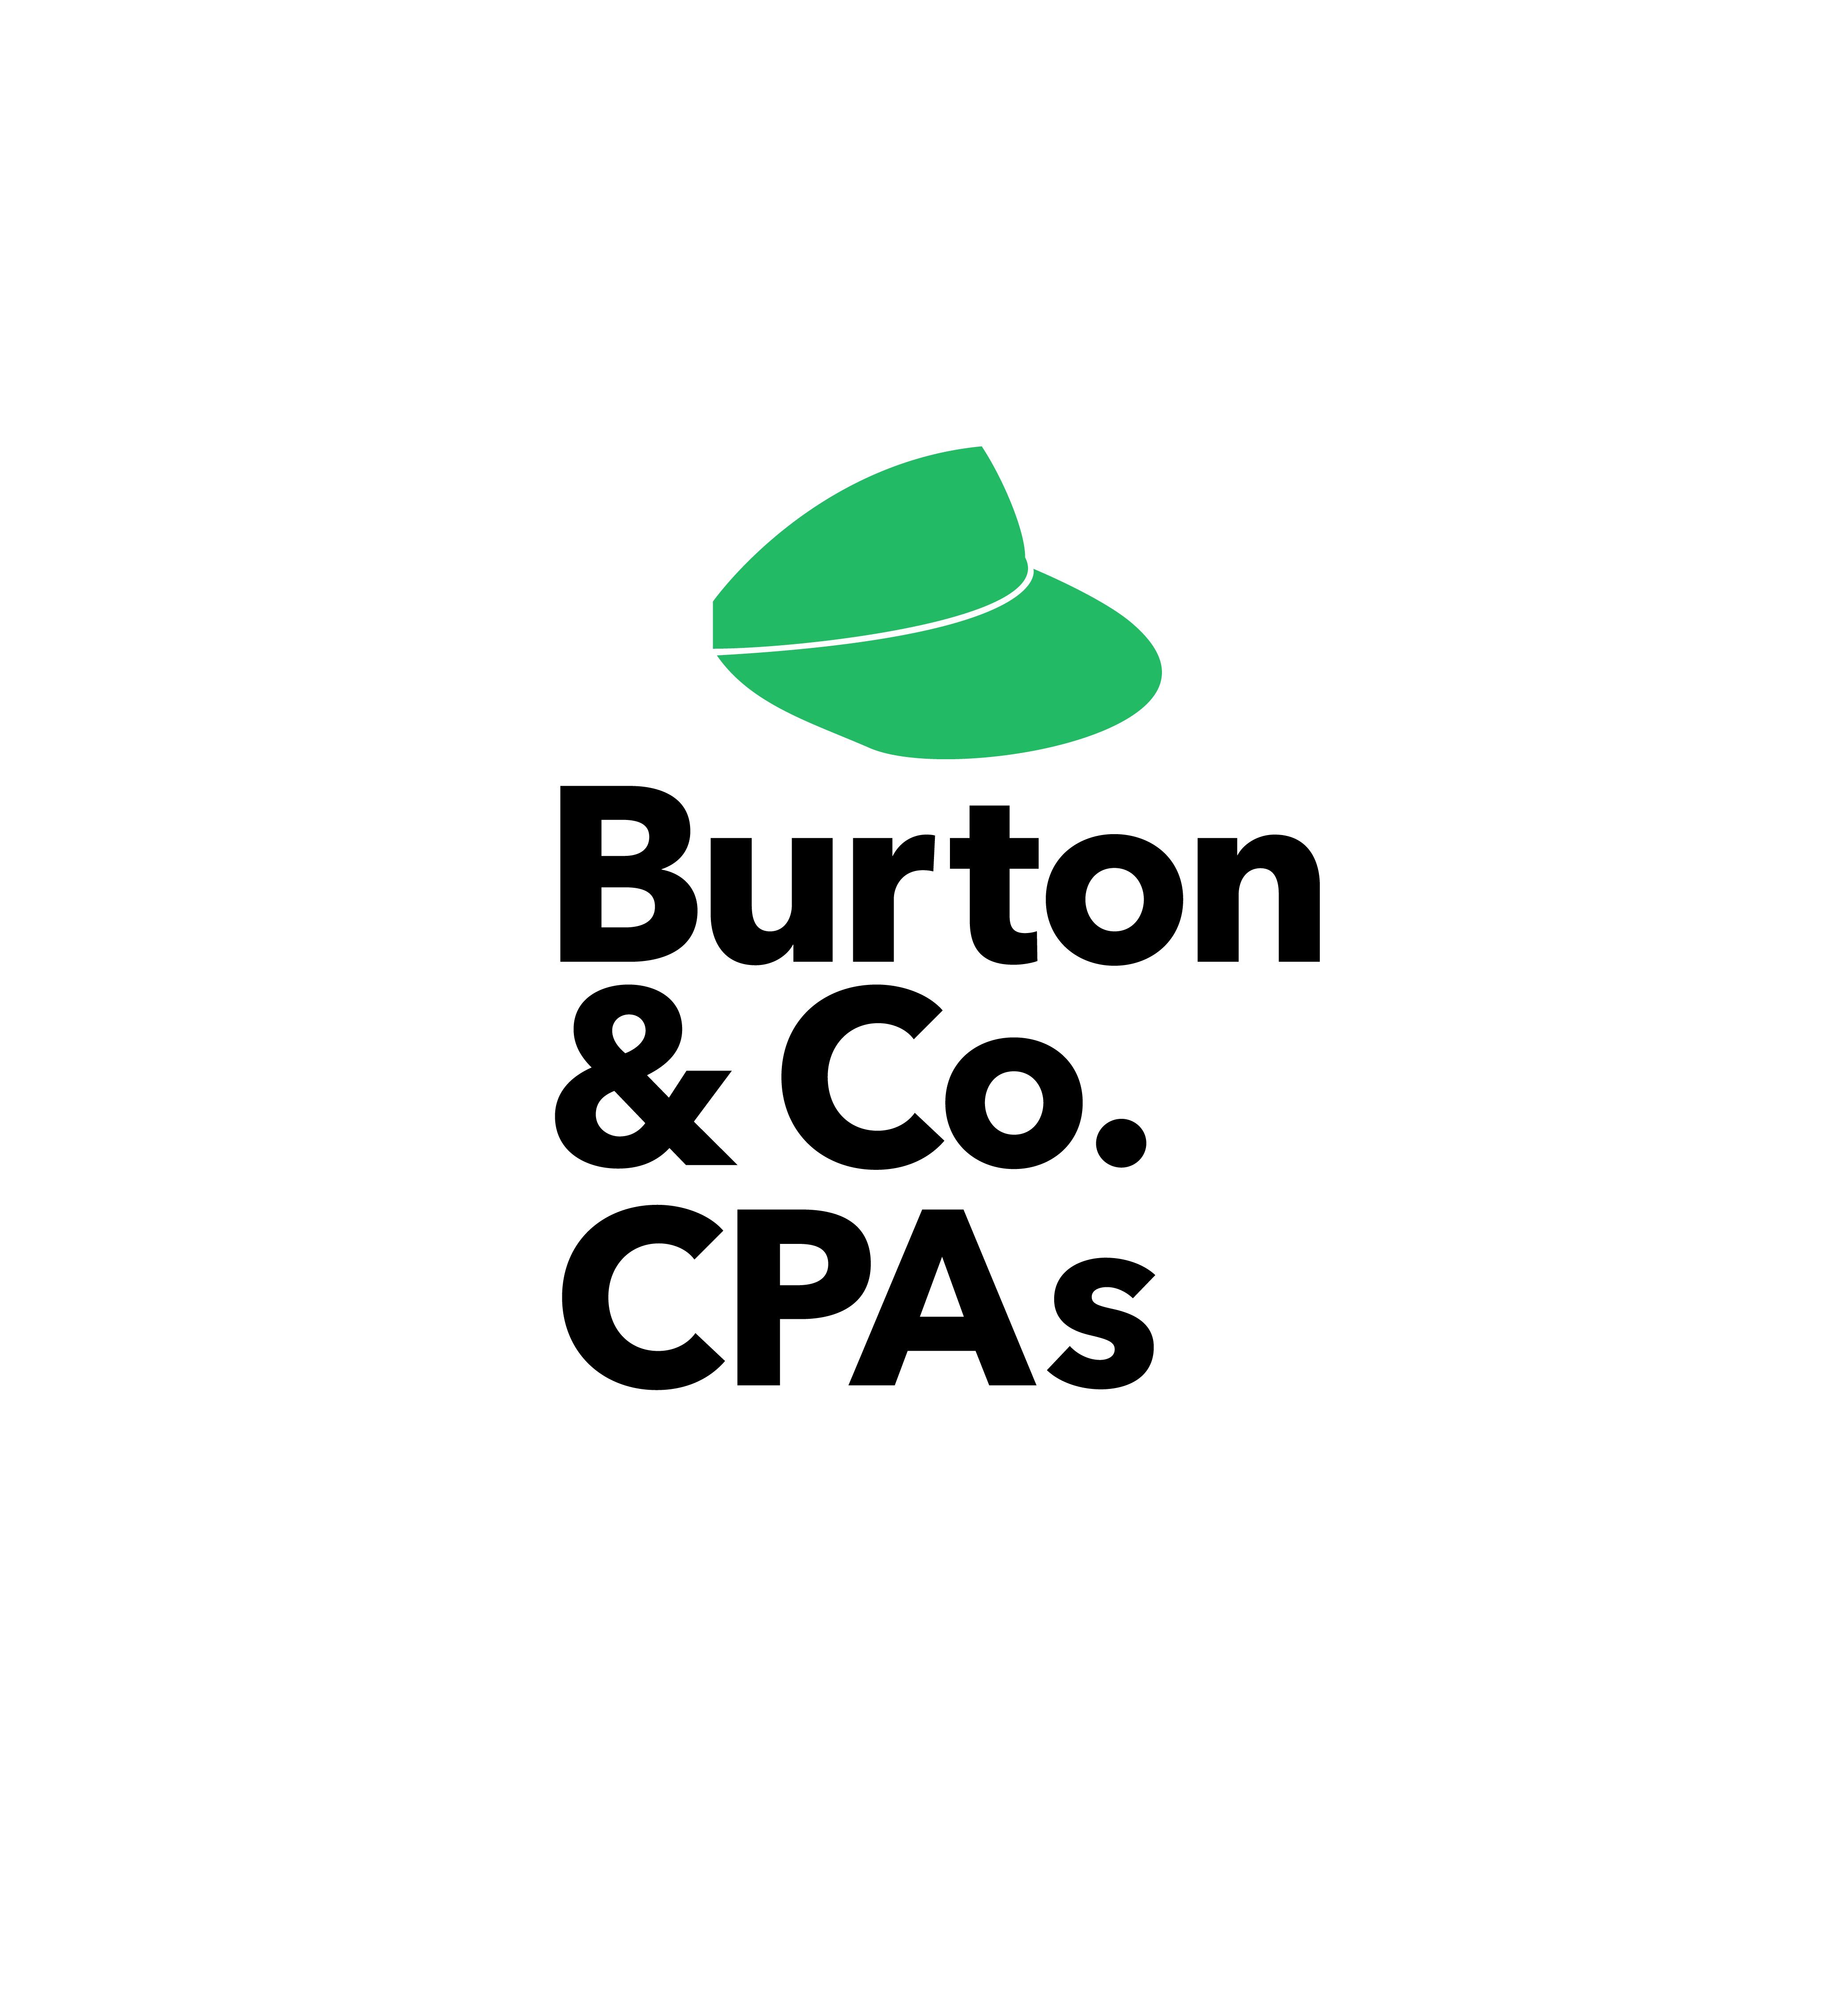 Burton & Co., CPAs profile on Qualified.One